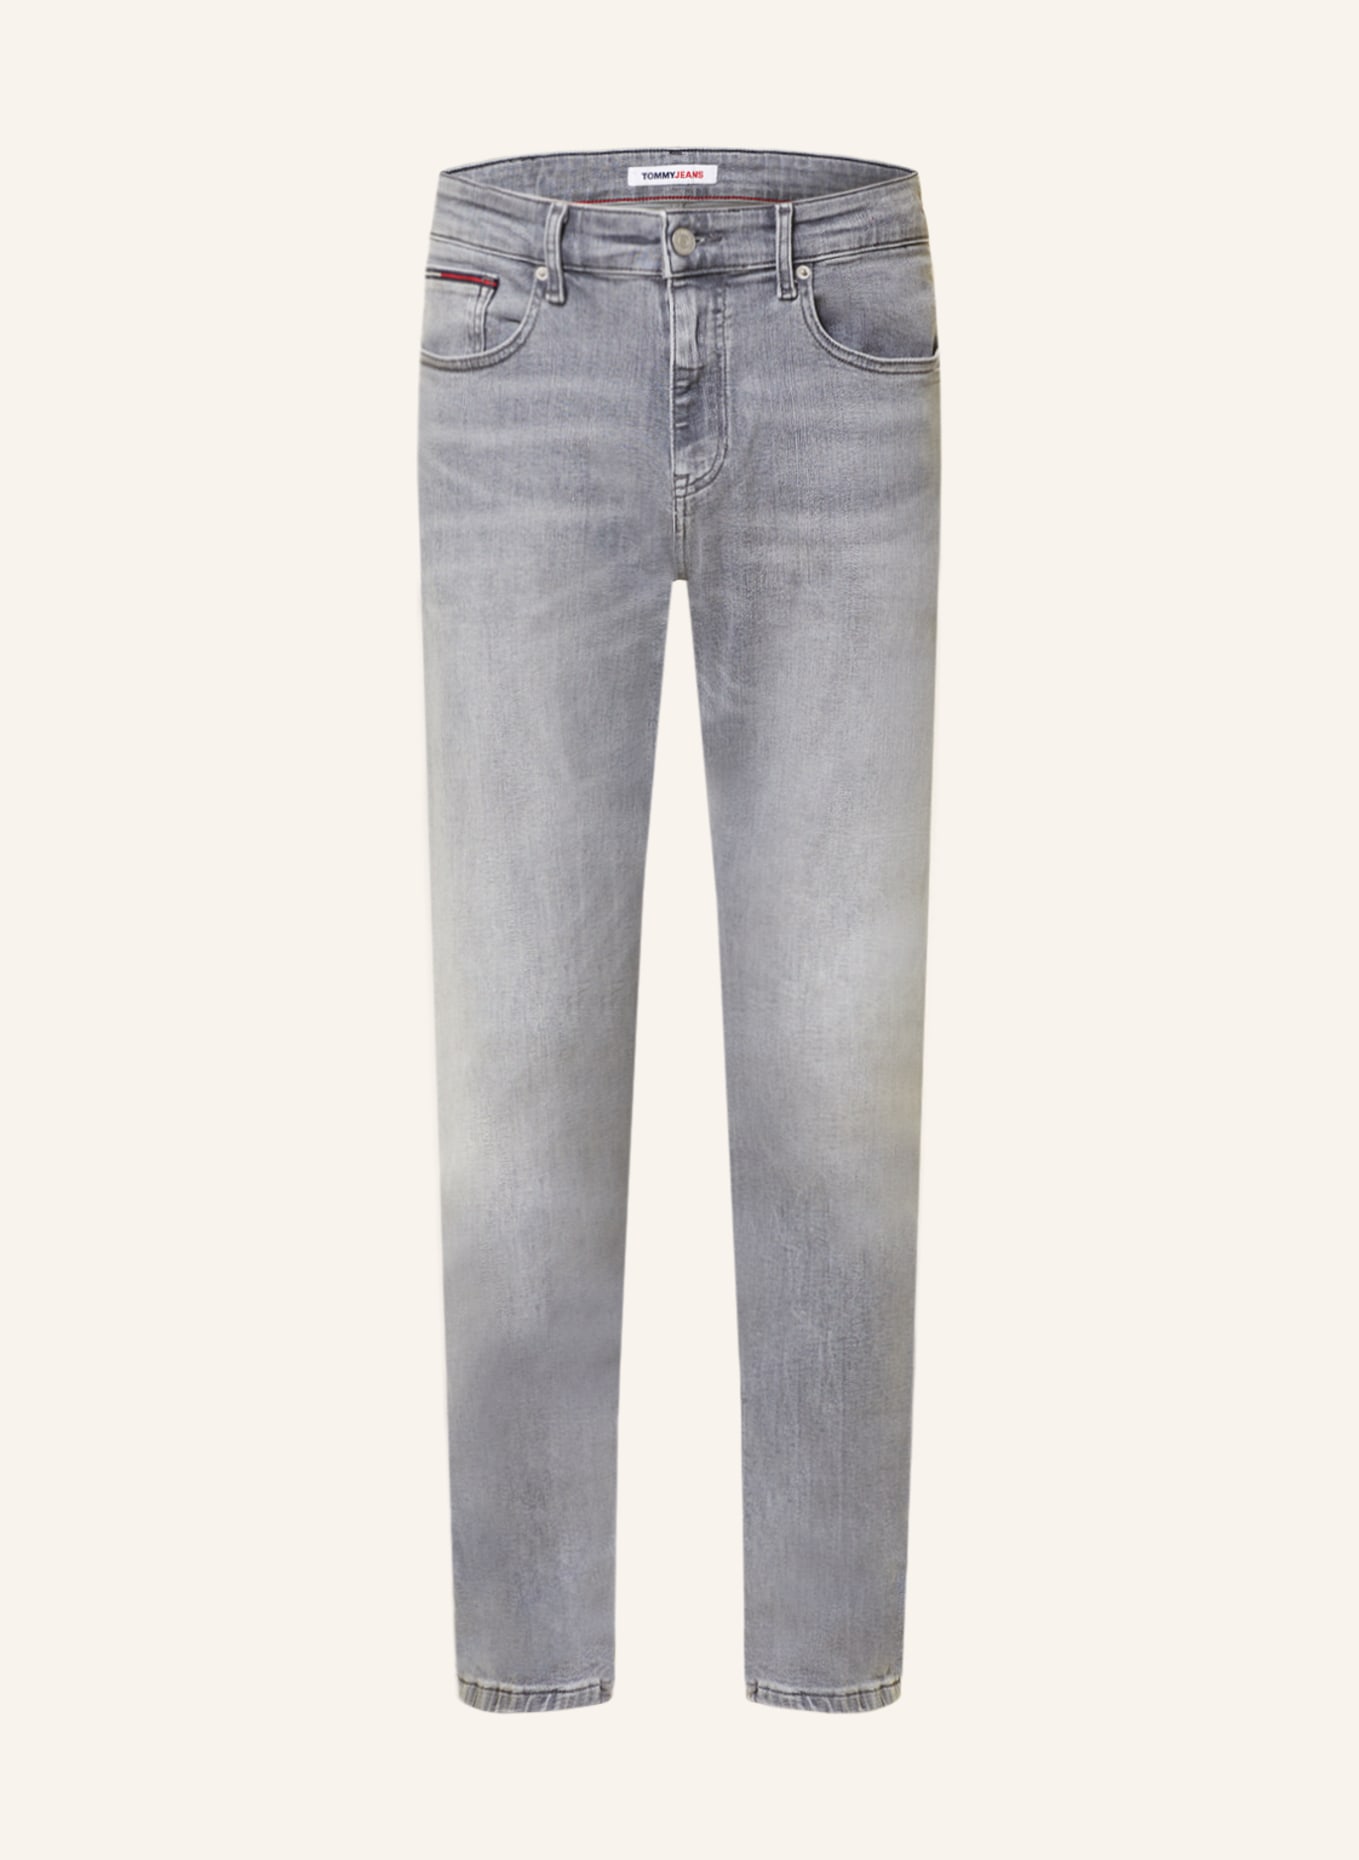 TOMMY JEANS Jeans AUSTIN Slim Fit, Farbe: 1BZ Denim Black (Bild 1)